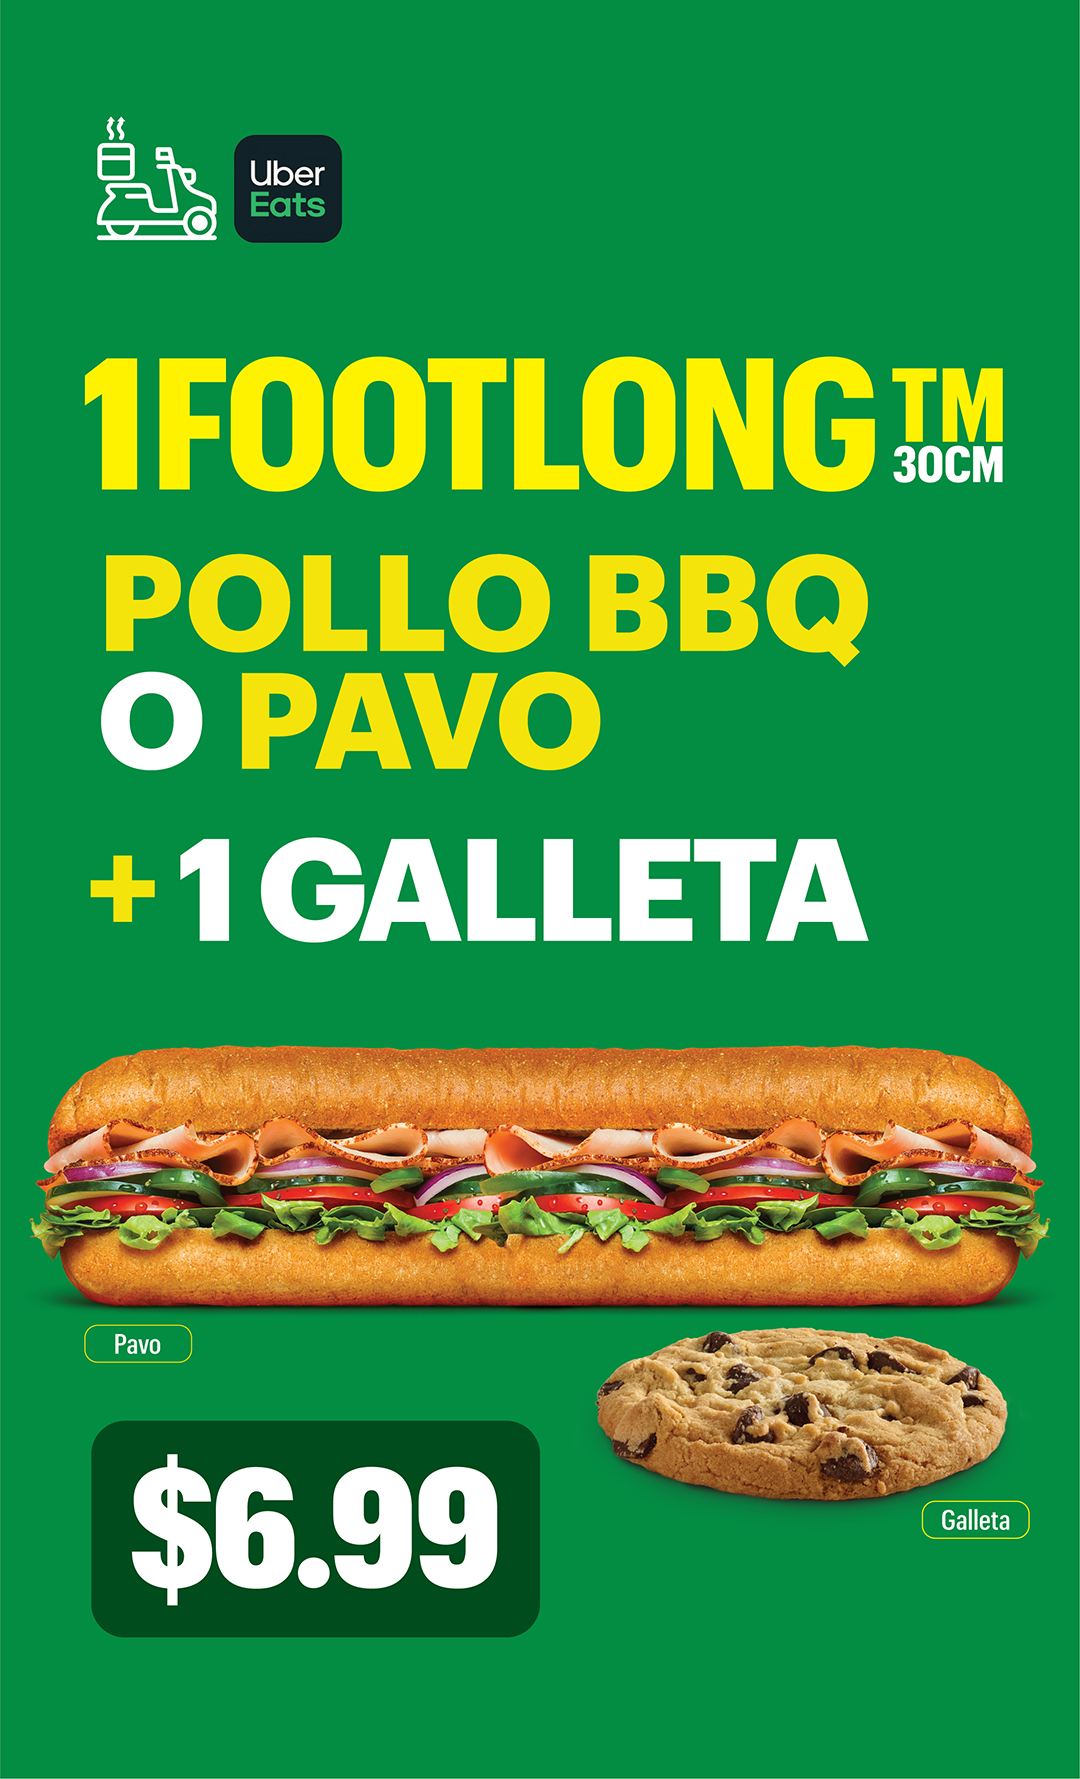 1footlong-30cm-galleta-699-uber-eats